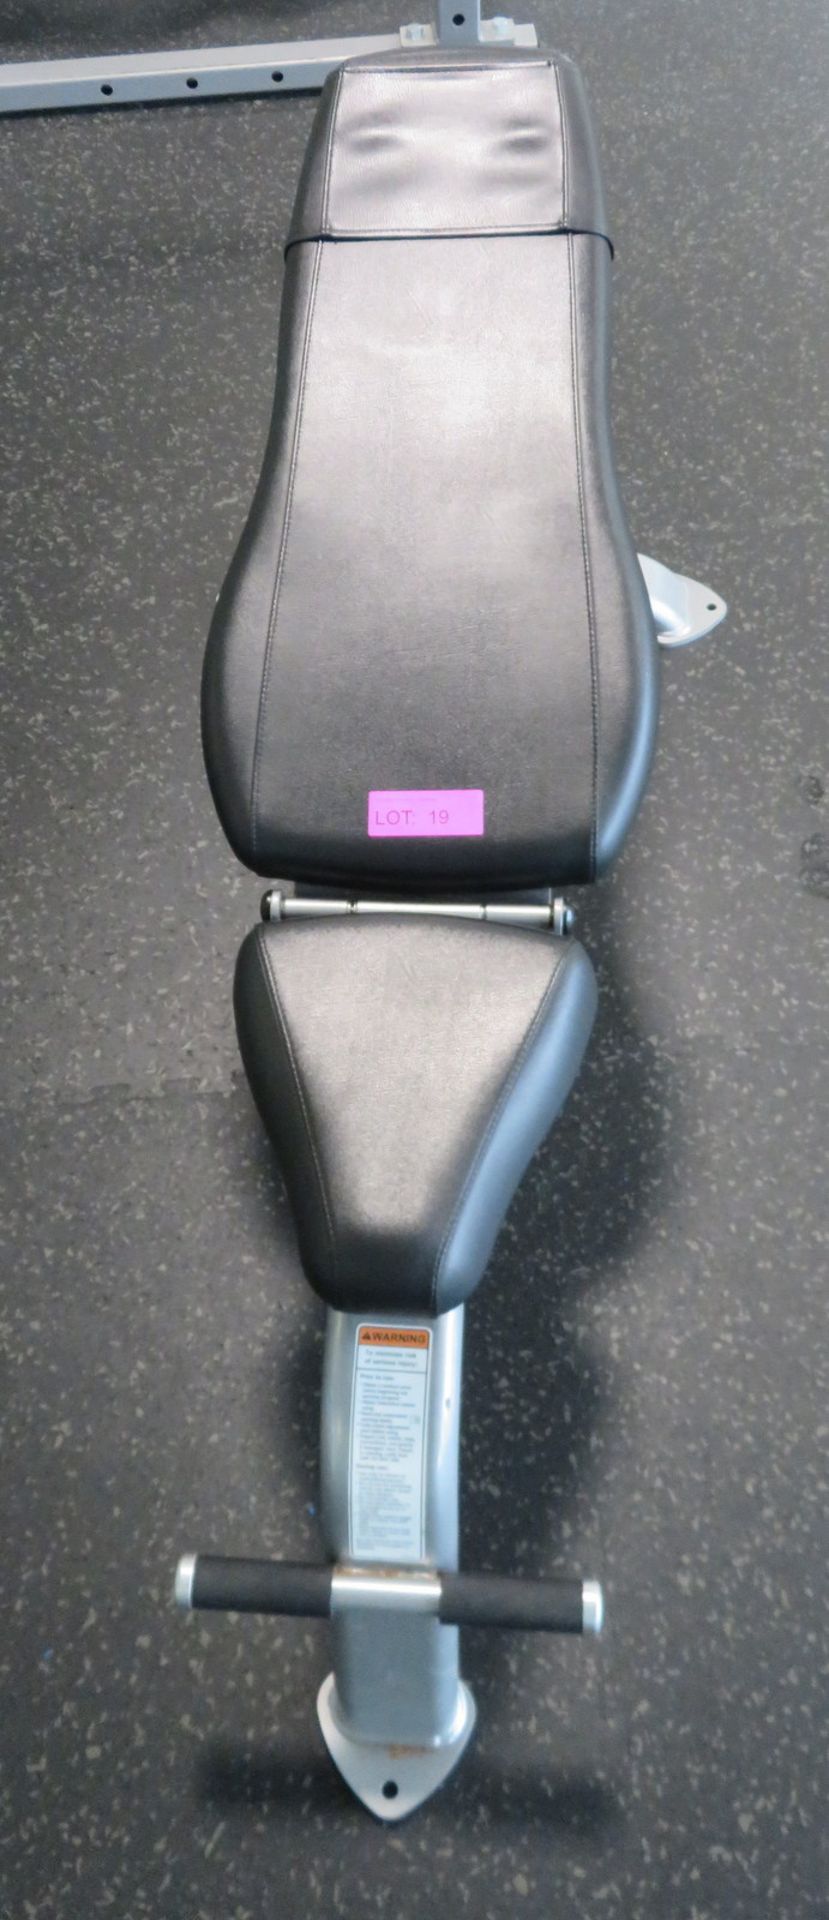 Cybex Height Adjustable Gym Bench. - Image 3 of 5